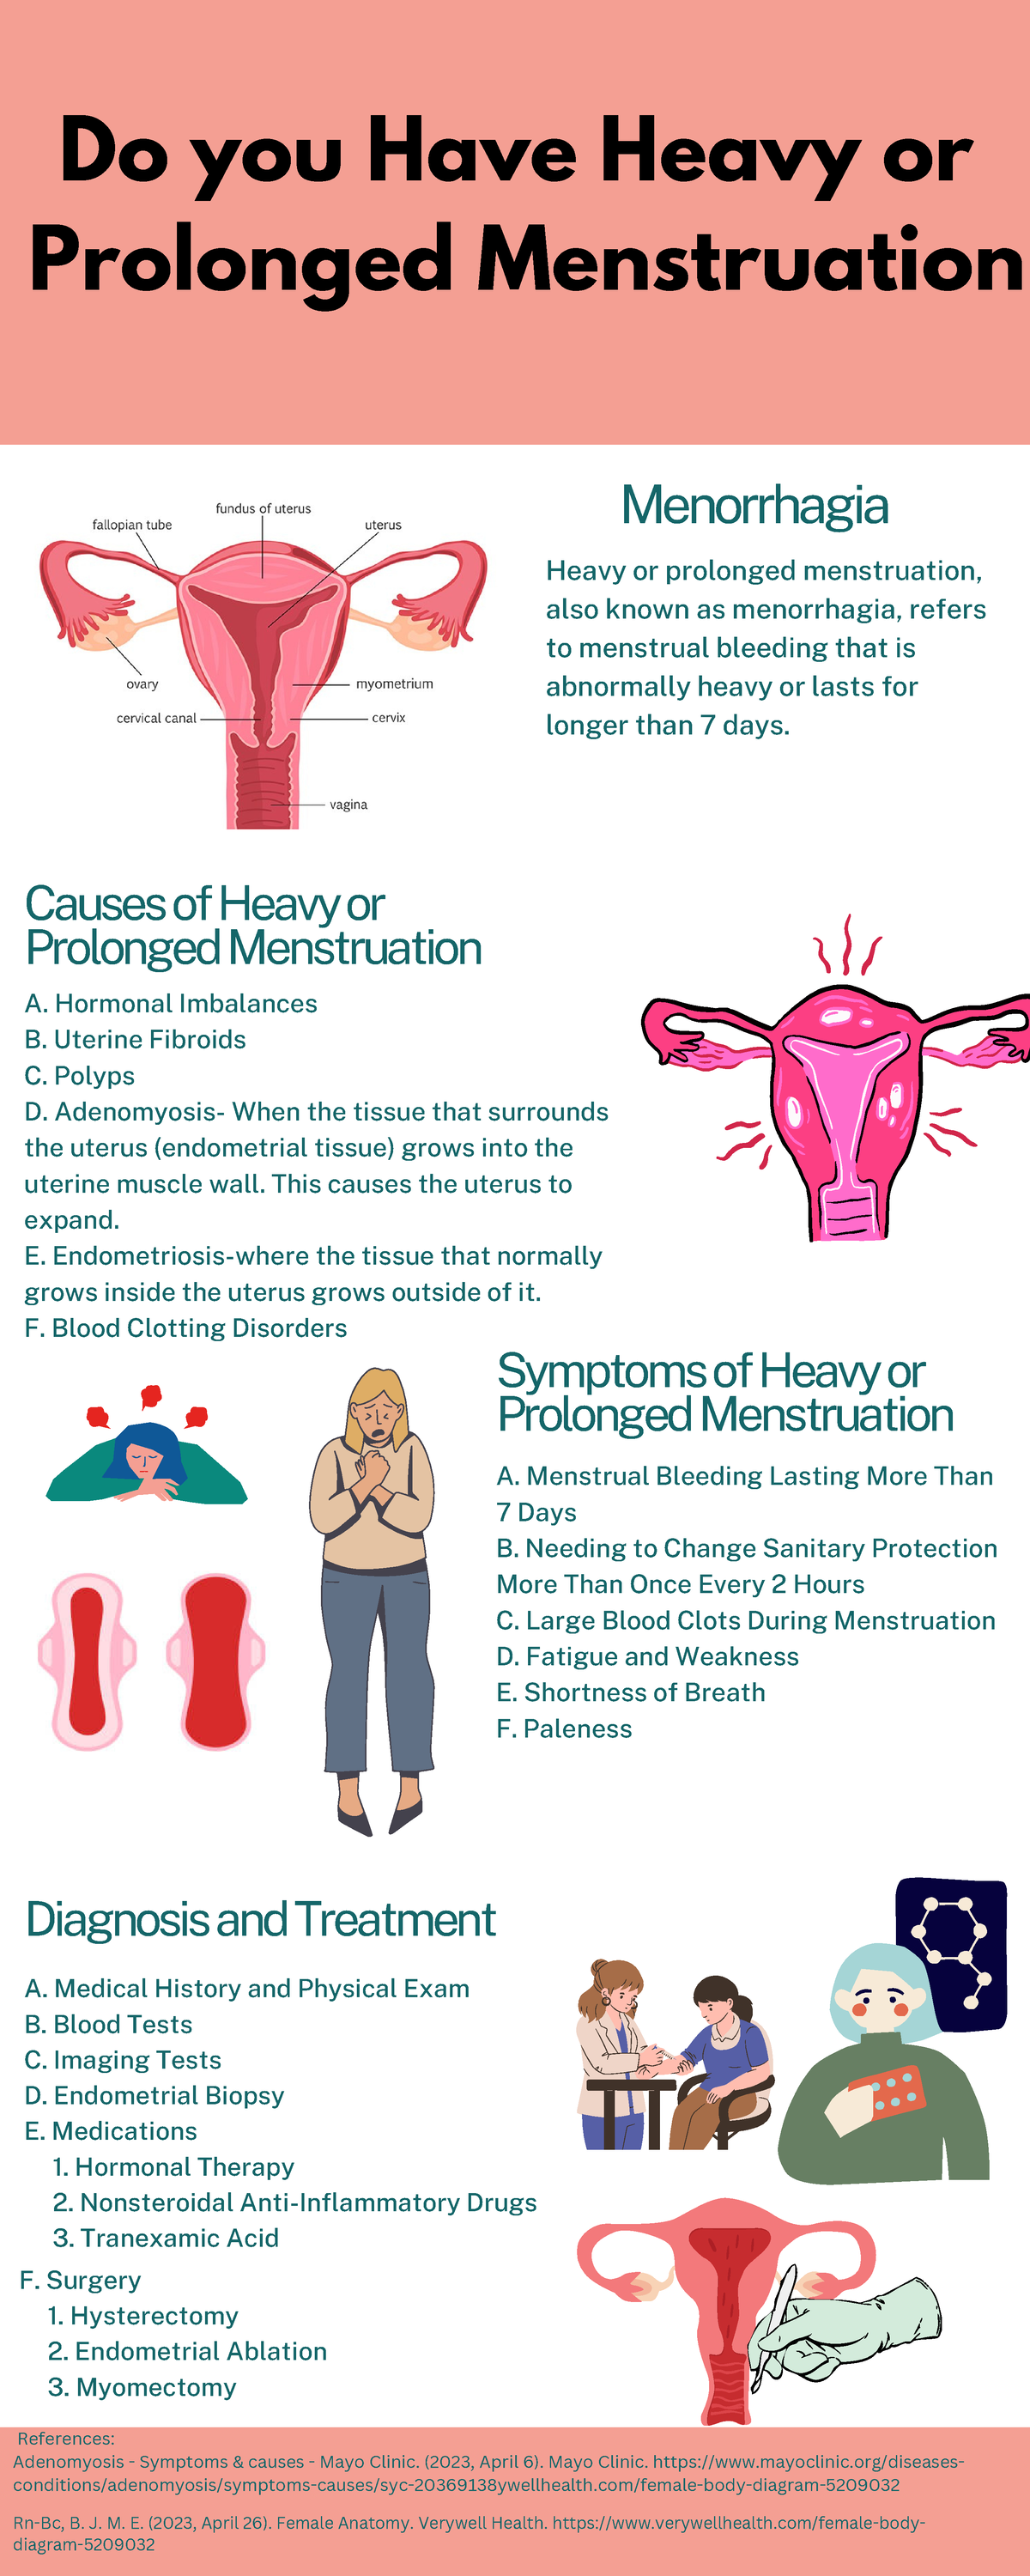 Endometriosis - Symptoms and causes - Mayo Clinic